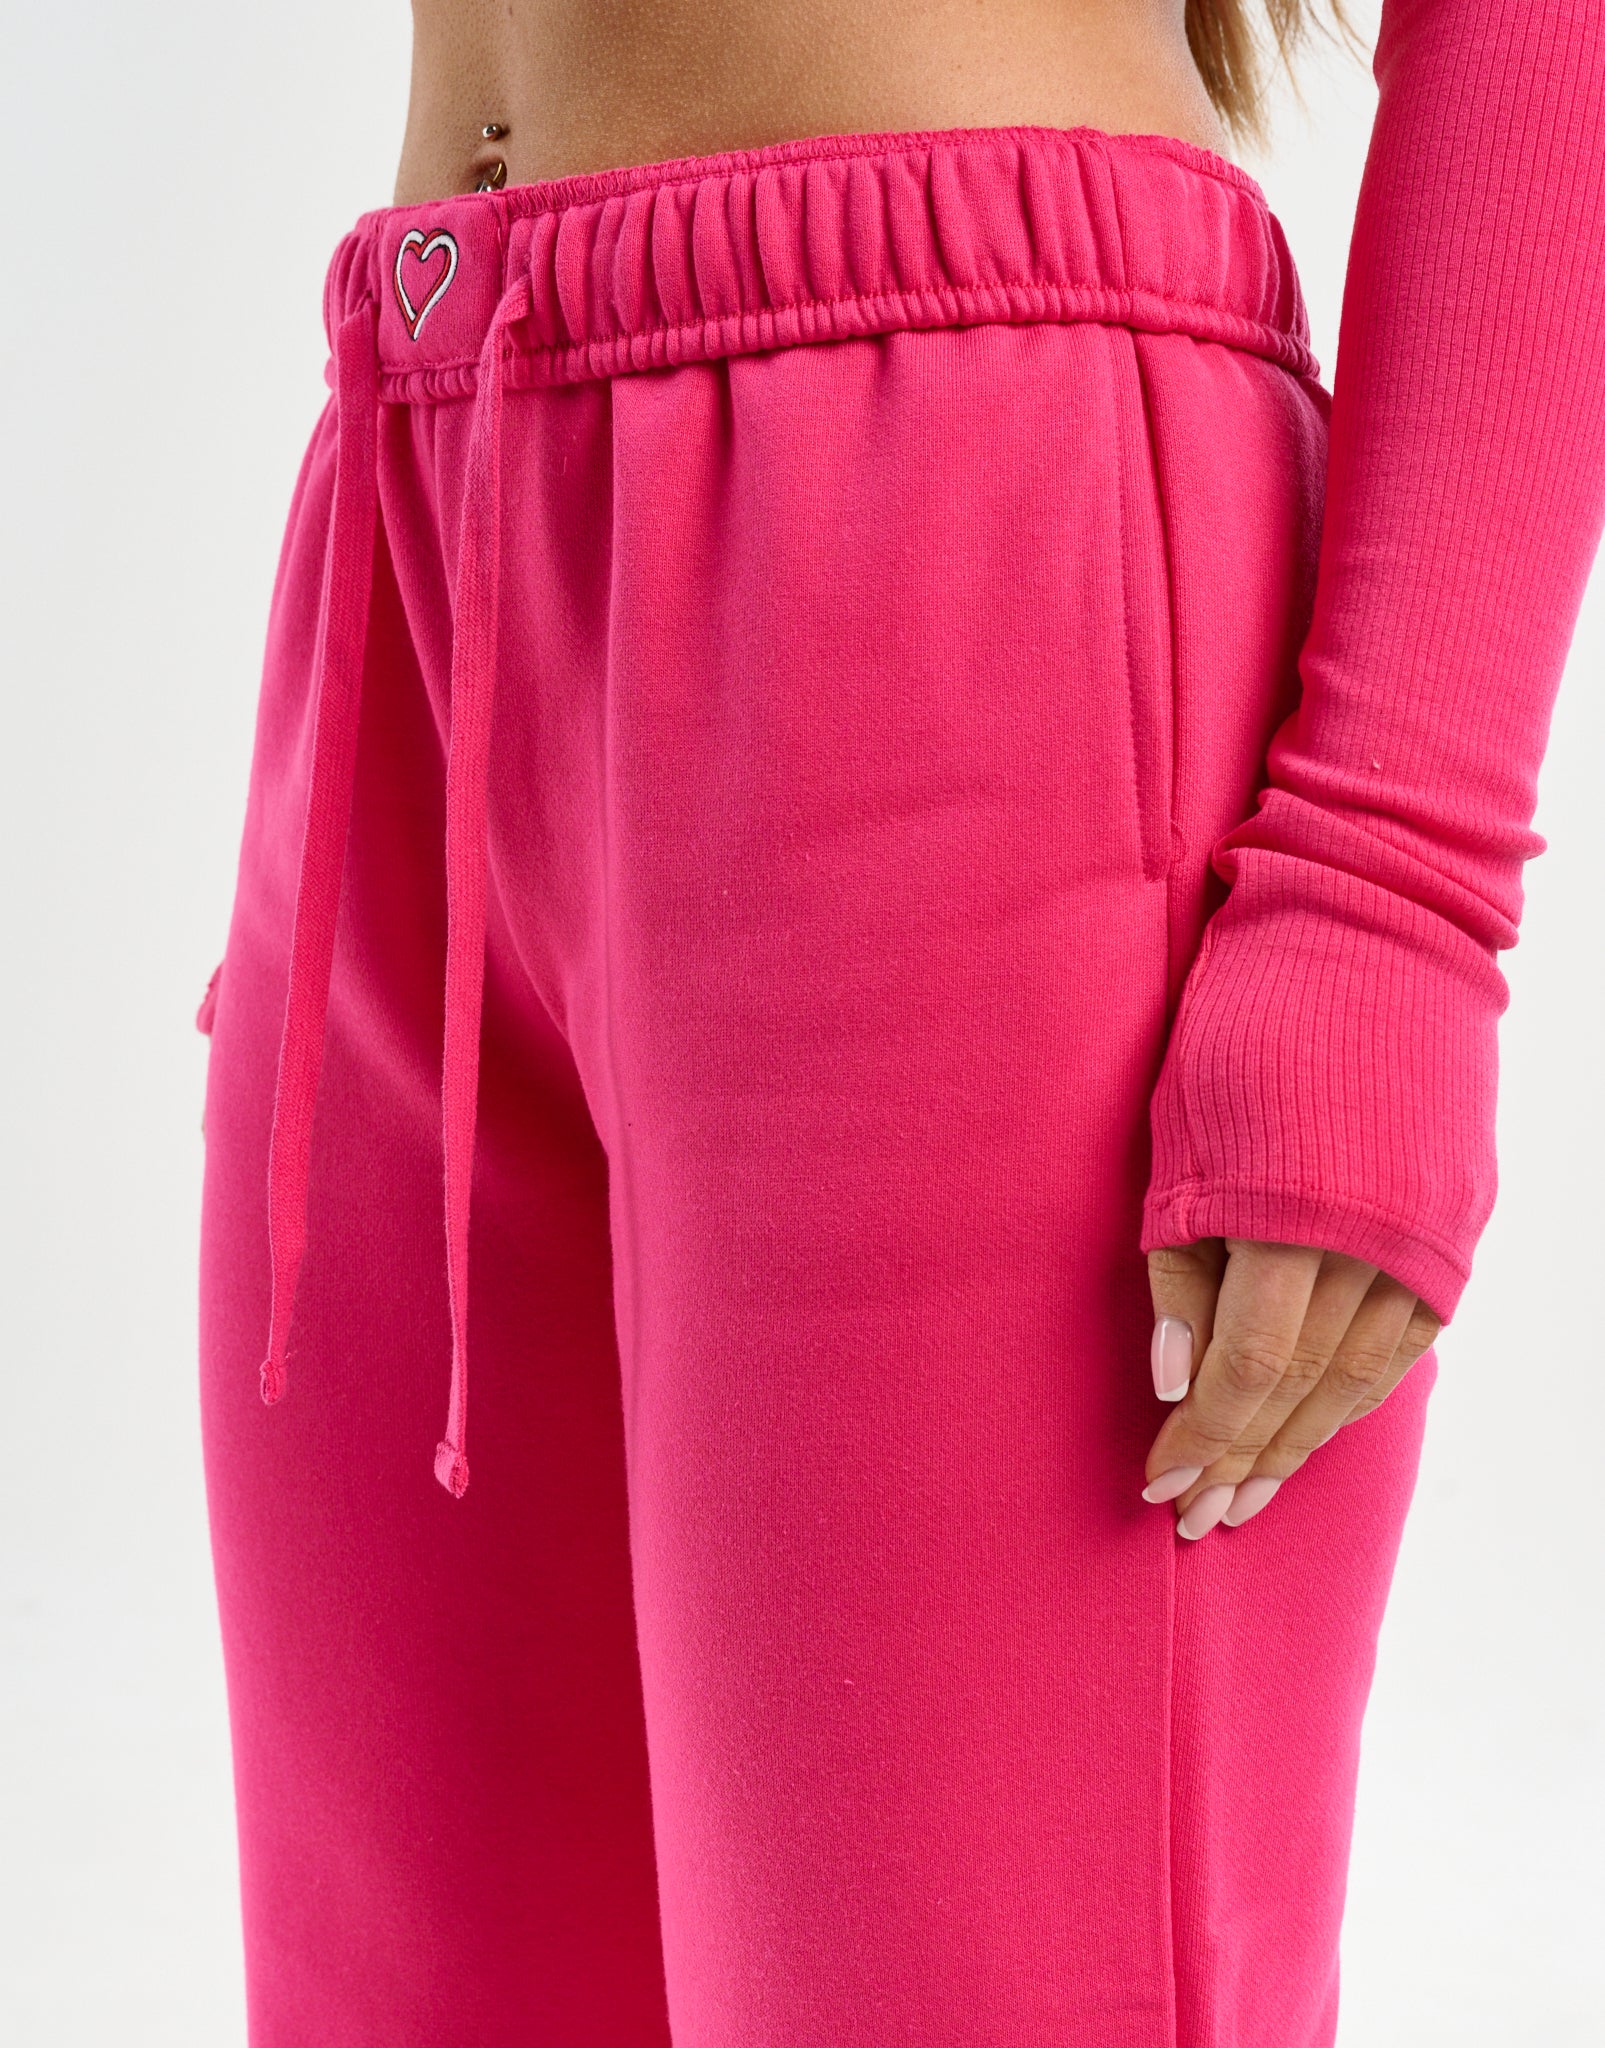 Love Sweatpants - Bright Pink